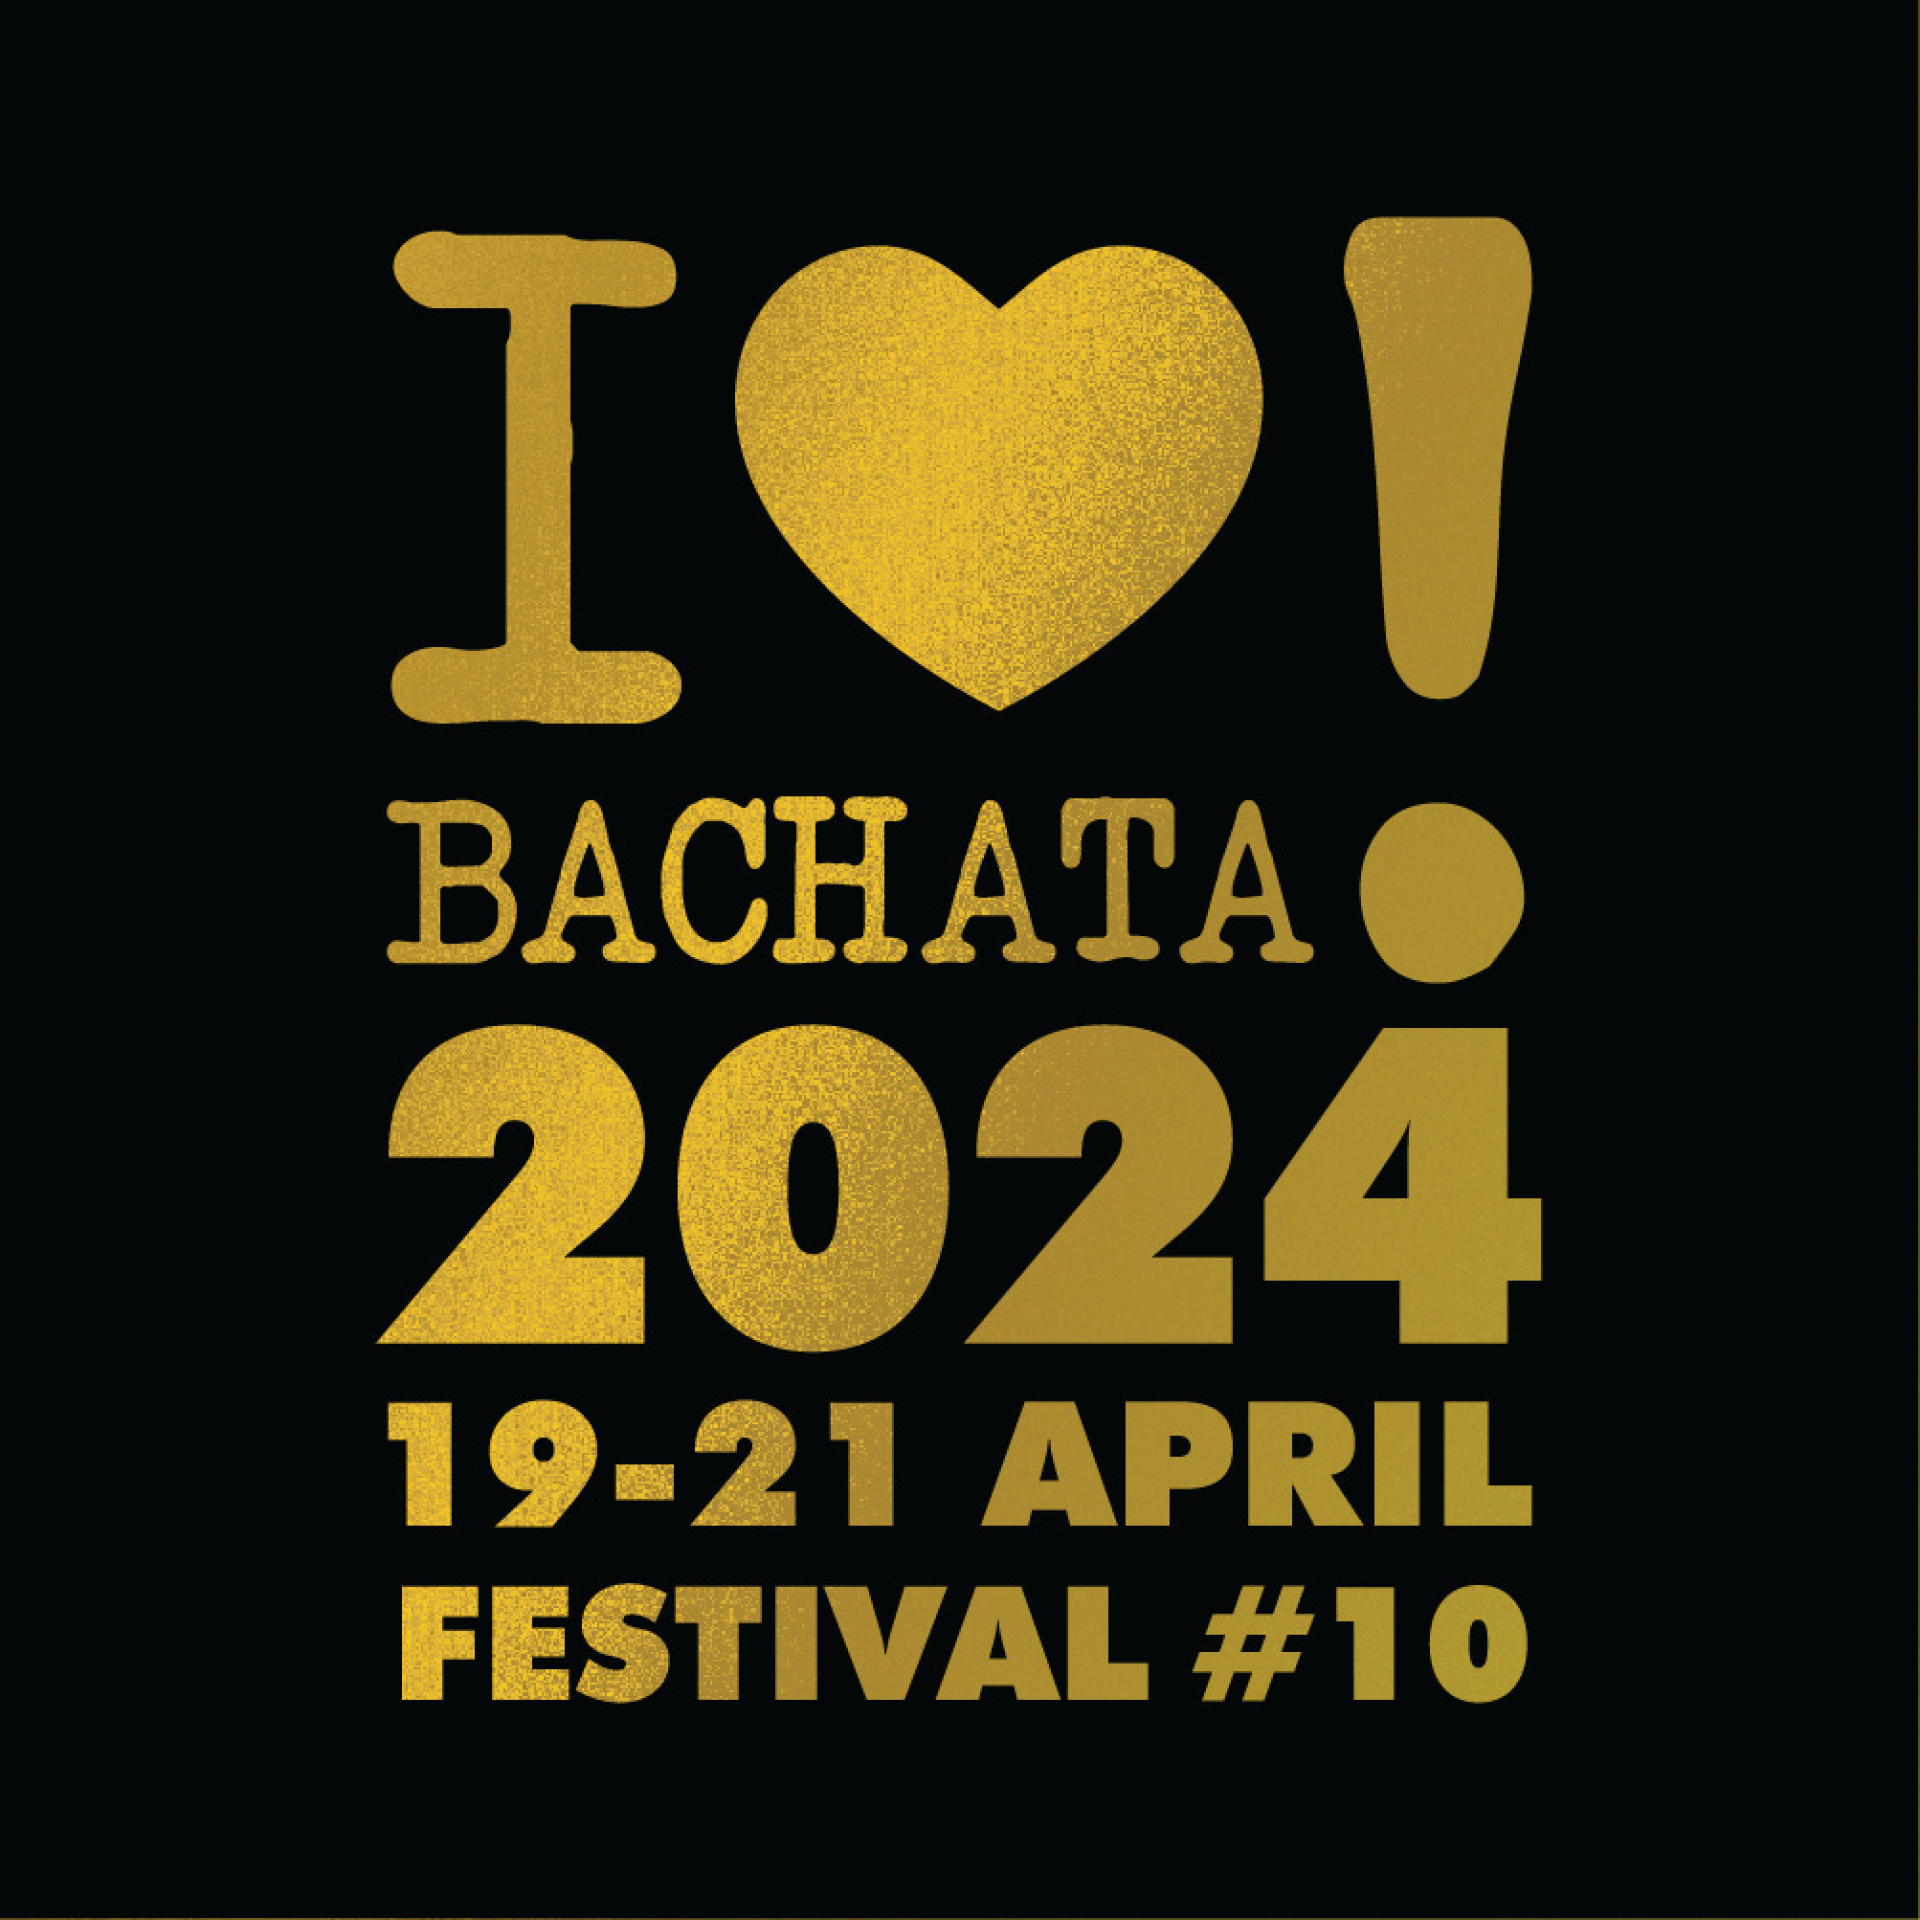 I LOVE BACHATA FESTIVAL 2024 go&dance